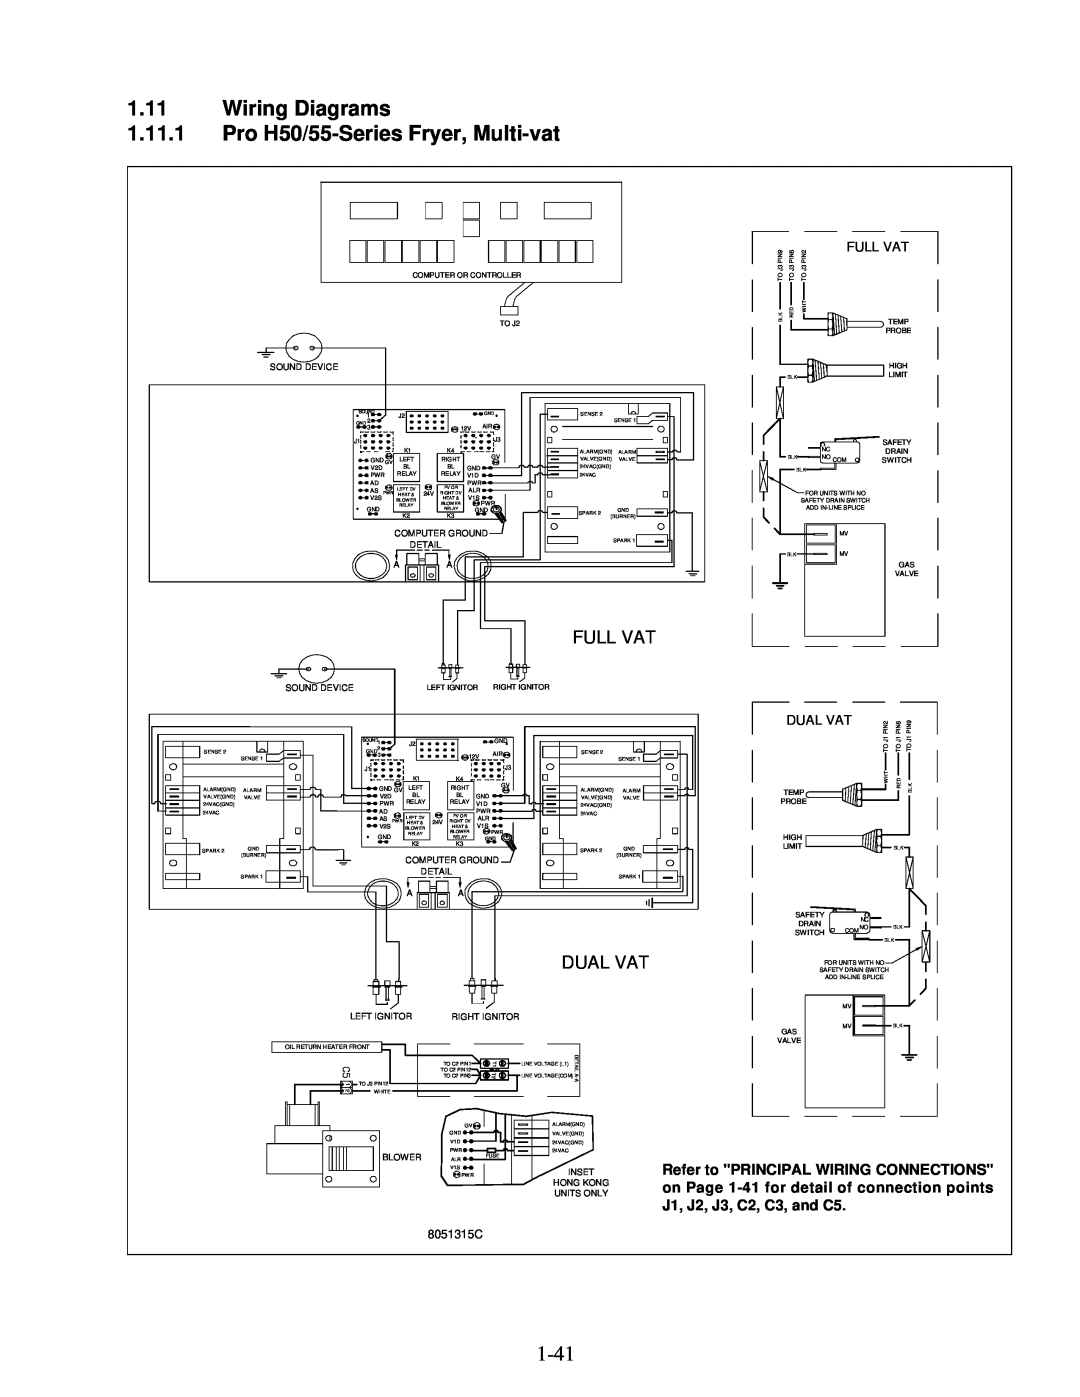 Frymaster manual 1.11Wiring Diagrams, 1.11.1Pro H50/55-SeriesFryer, Multi-vat, Full Vat, Dual Vat 